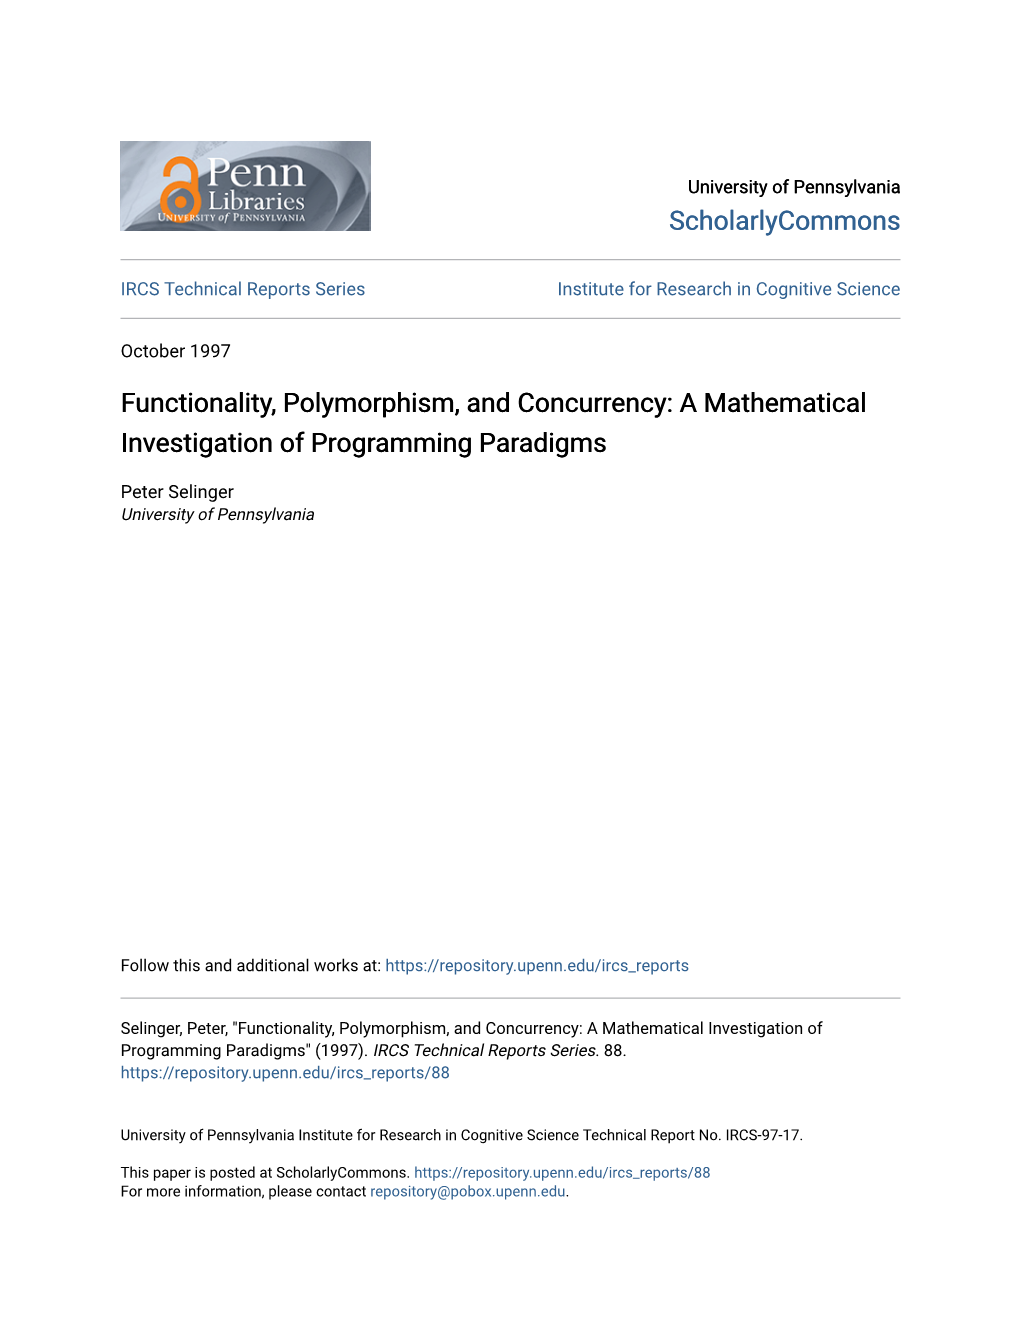 A Mathematical Investigation of Programming Paradigms